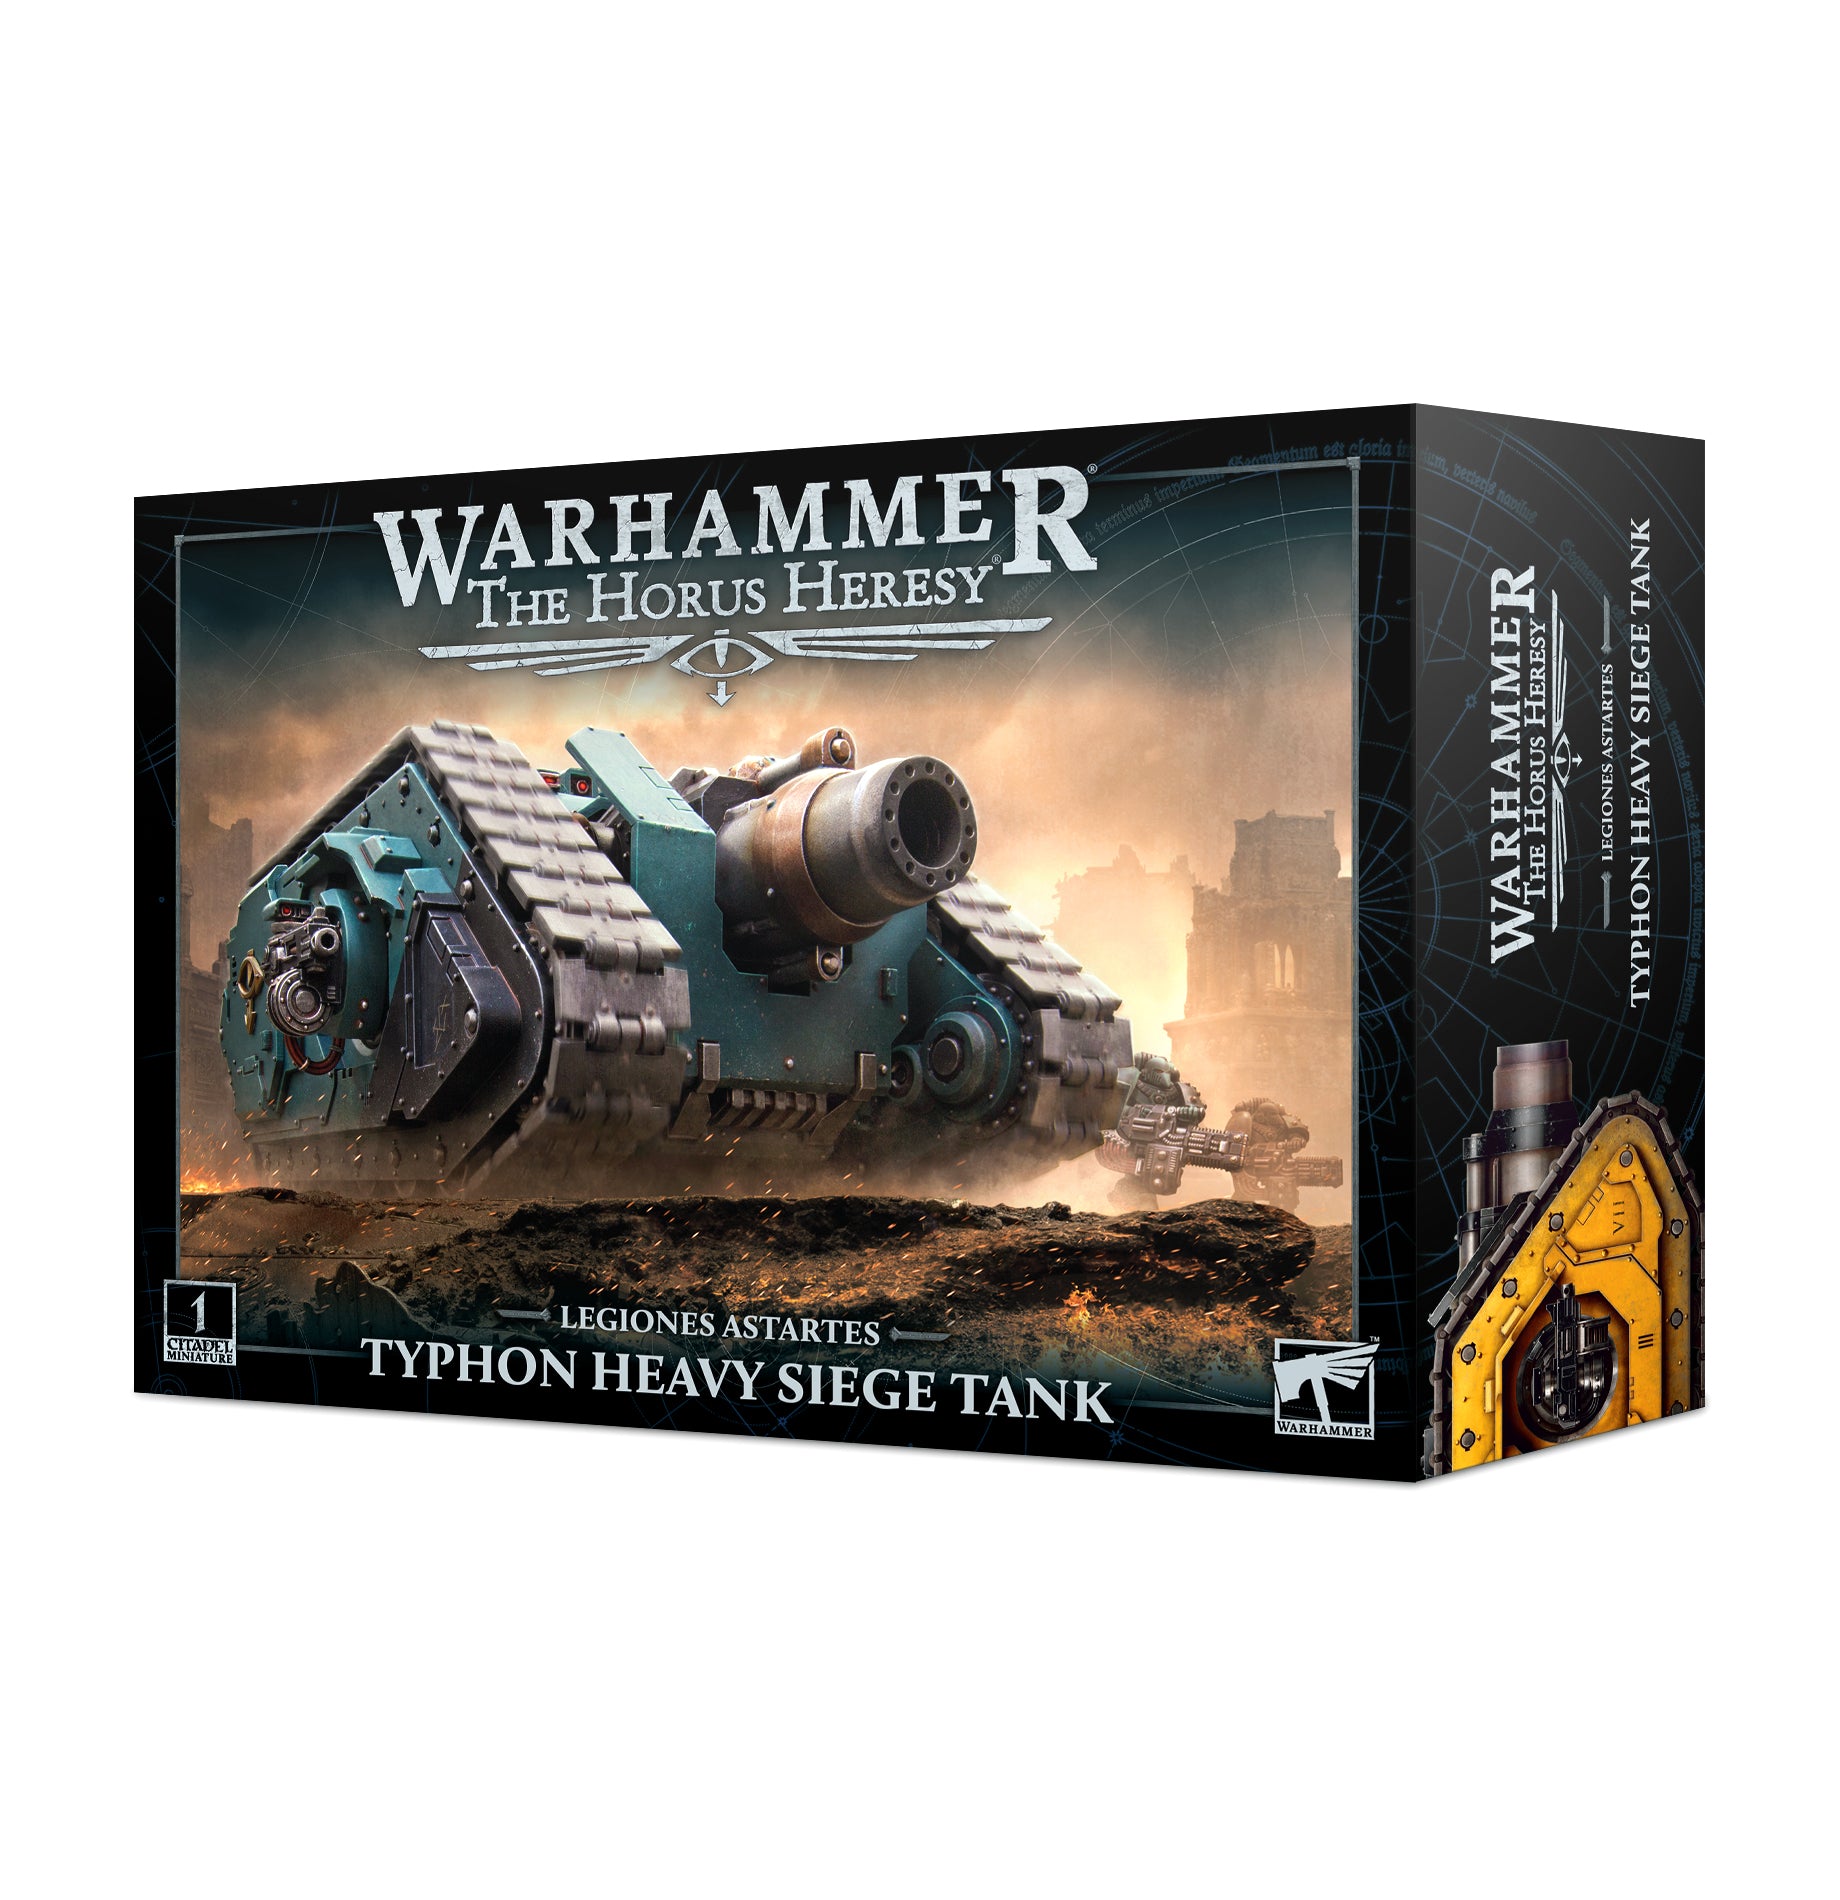 Warhammer Horus Heresy: Legiones Astartes Typhon Heavy Siege Tank